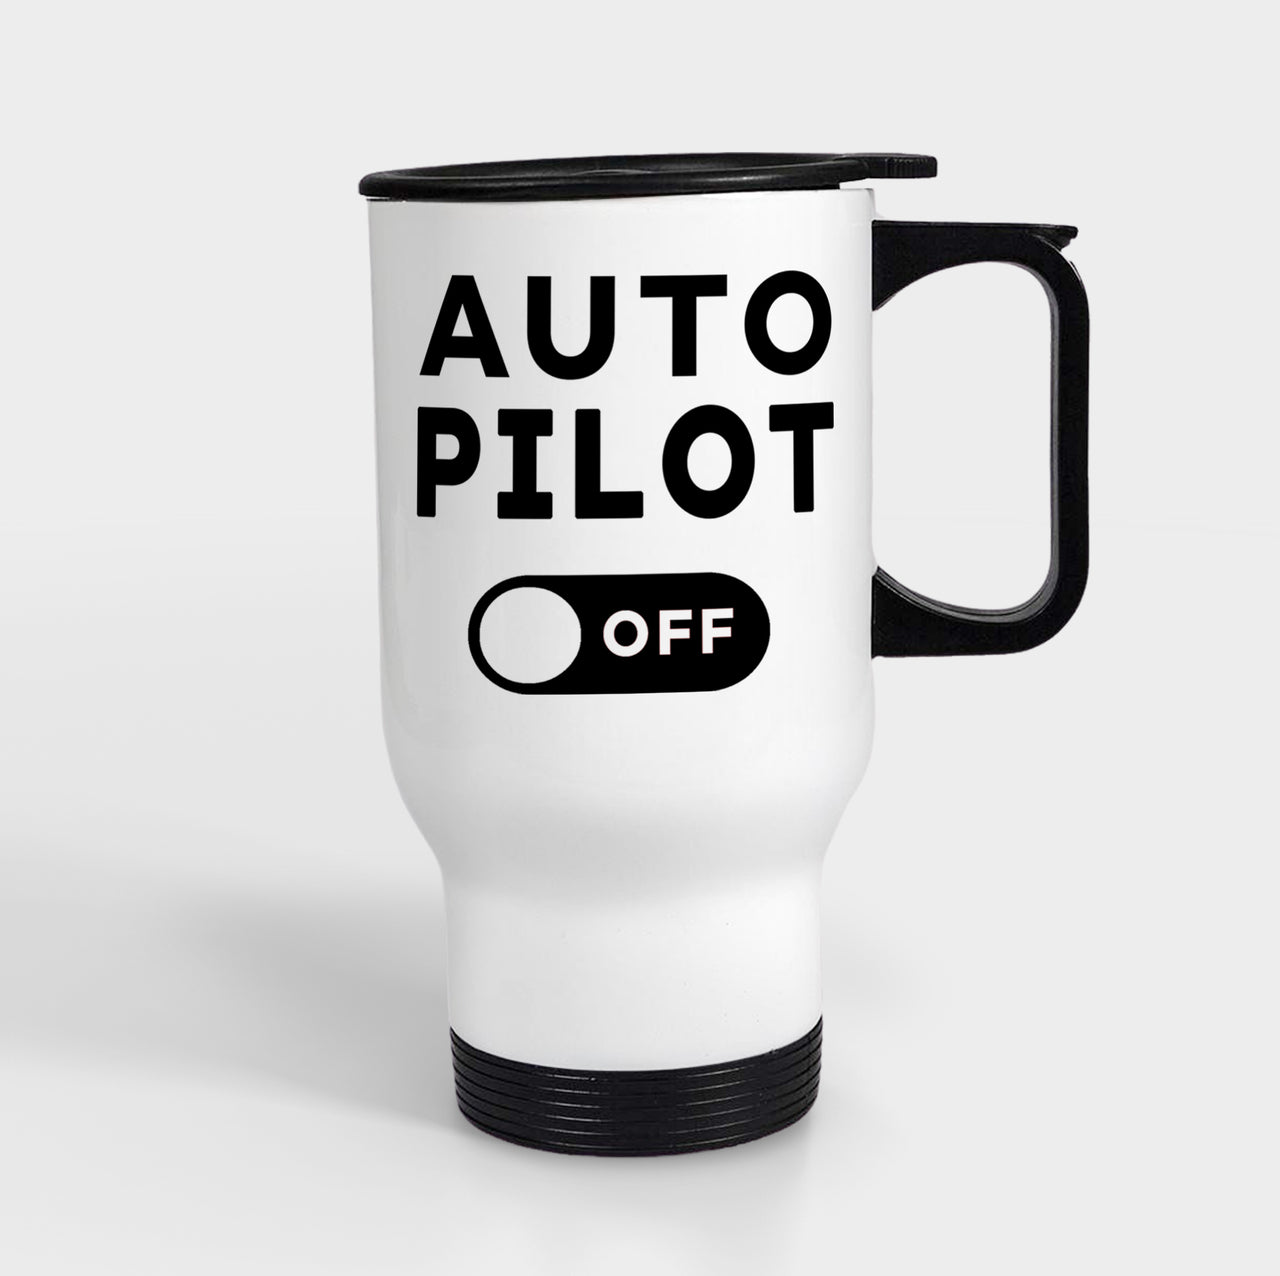 Auto Pilot Off Designed Travel Mugs (With Holder)